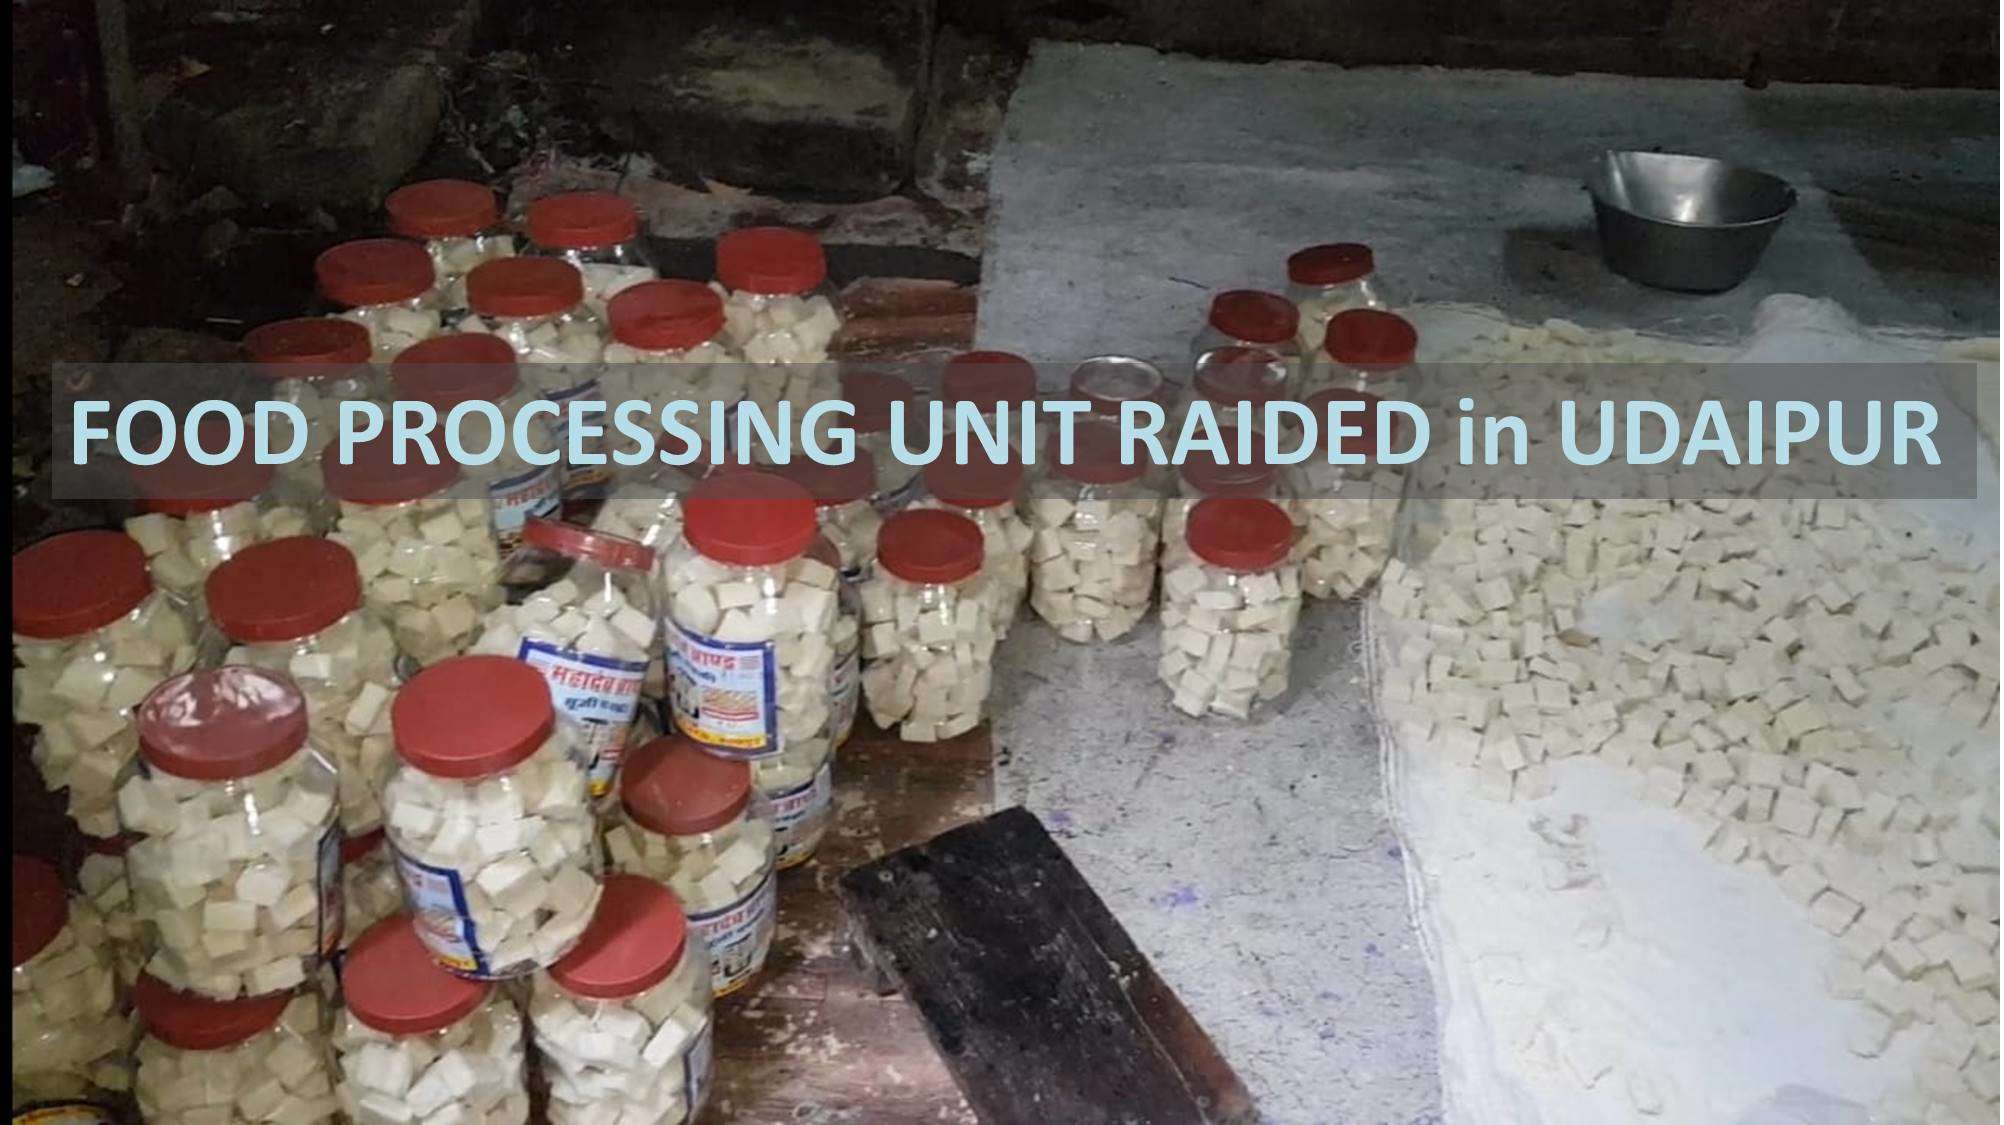 Consumers beware! Health department raids an unlicensed shady food processing unit in Dhanmandi